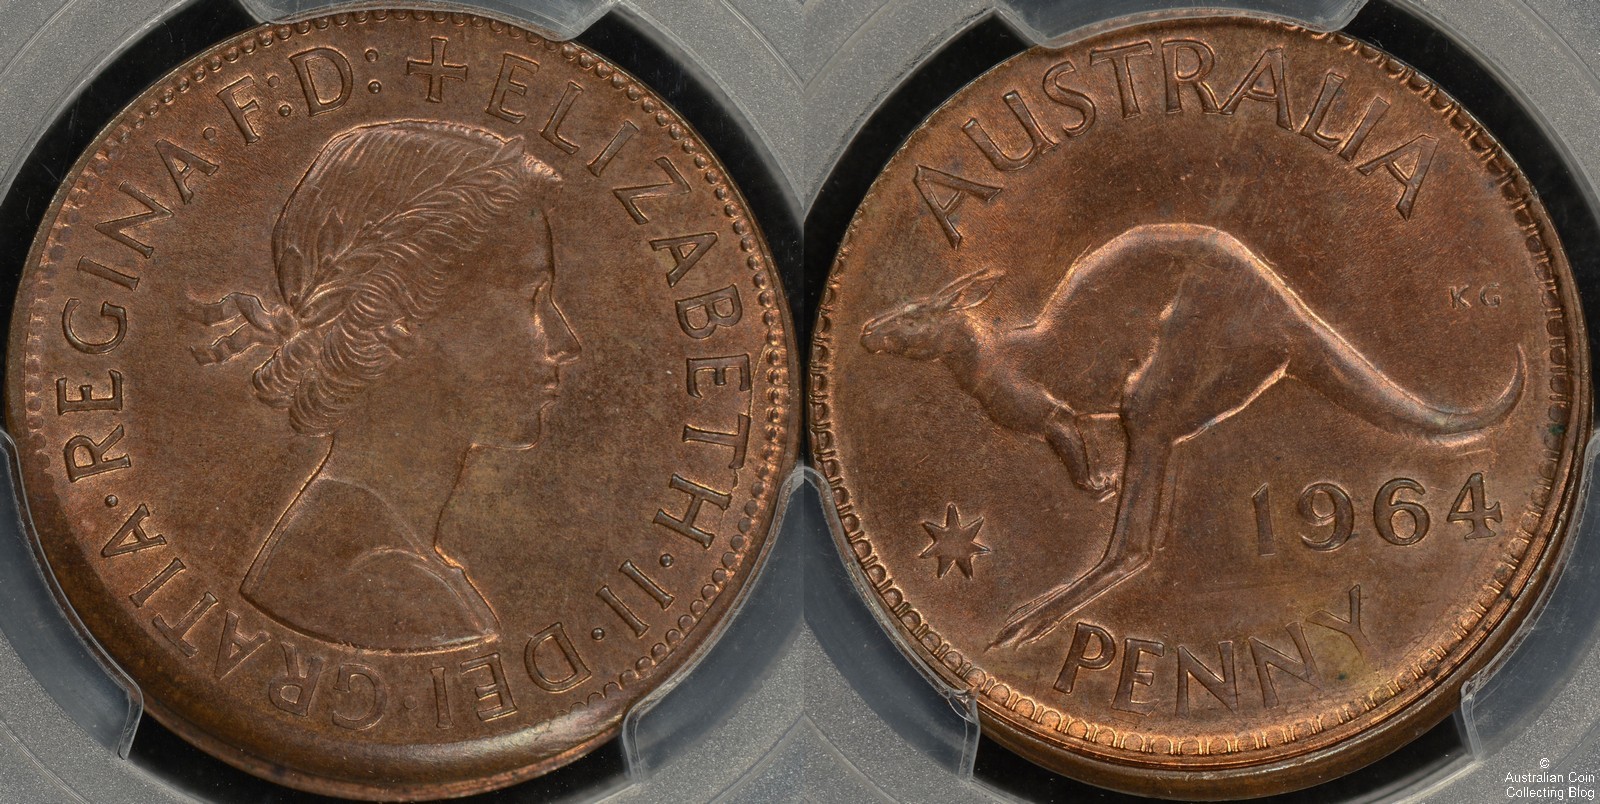 Australia 1964 Penny Partial Collar Error MS63RB